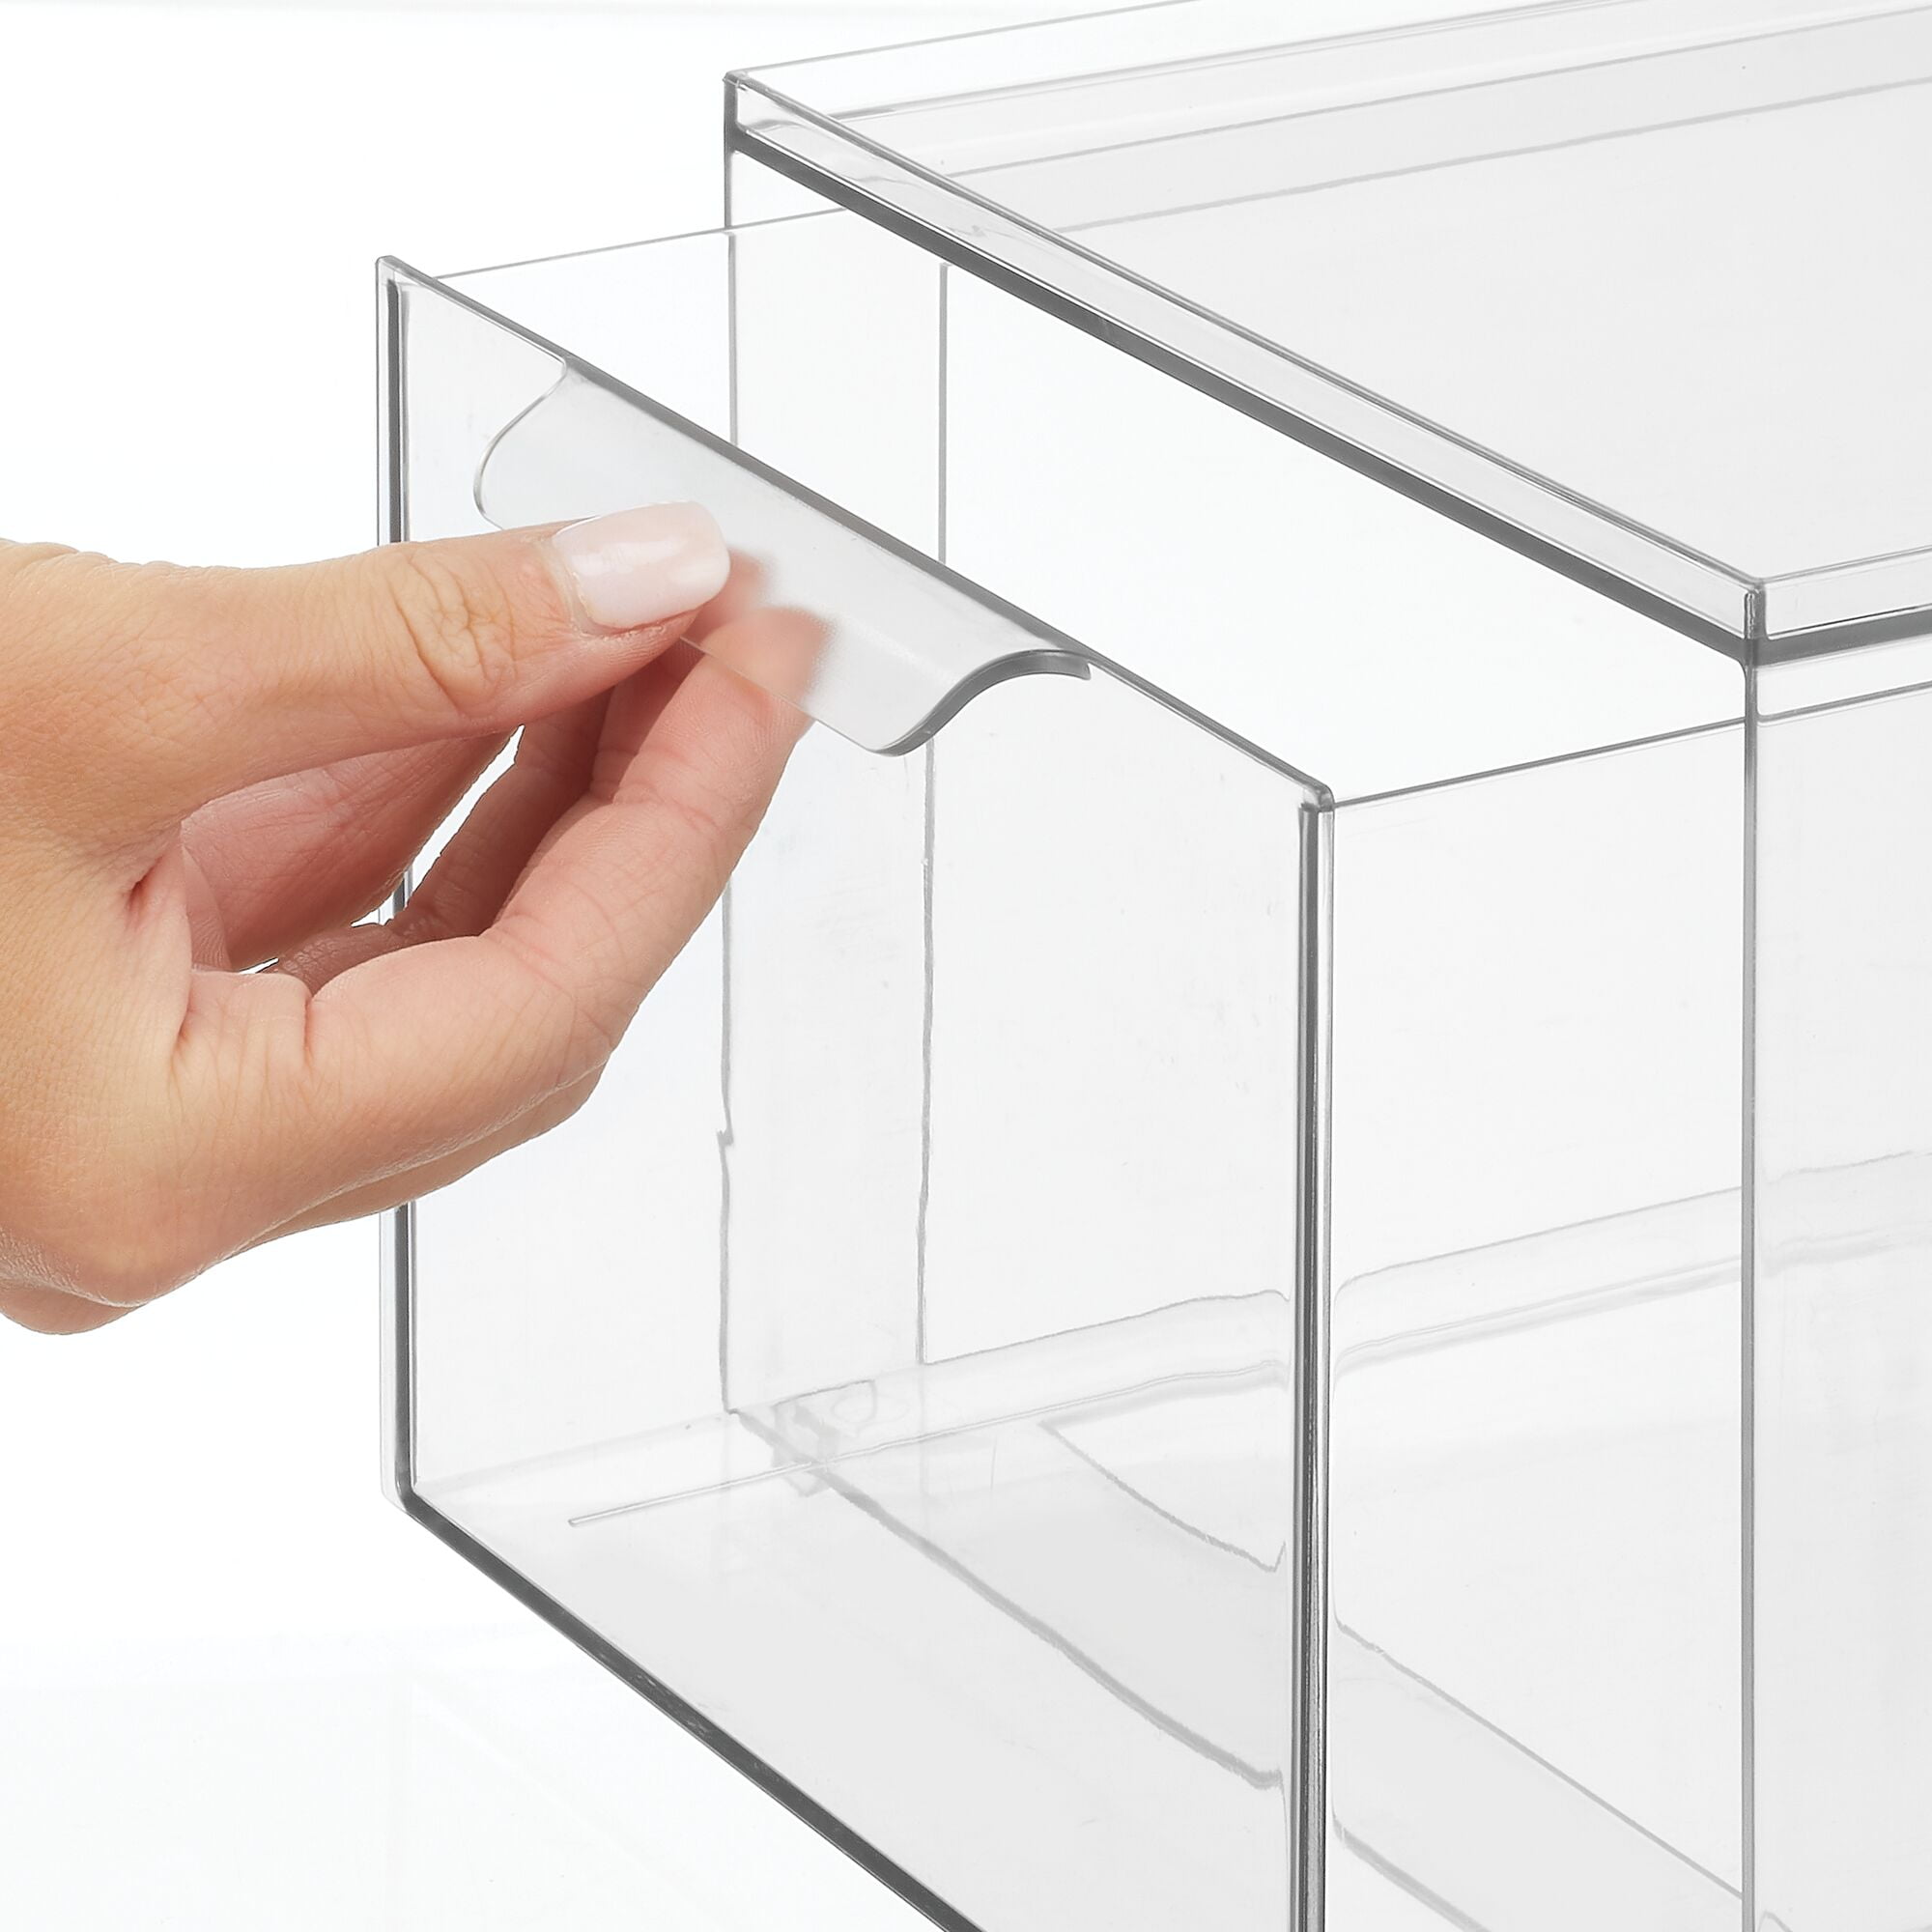 Mdesign Clarity Plastic Stacking Closet Storage Organizer Bin With